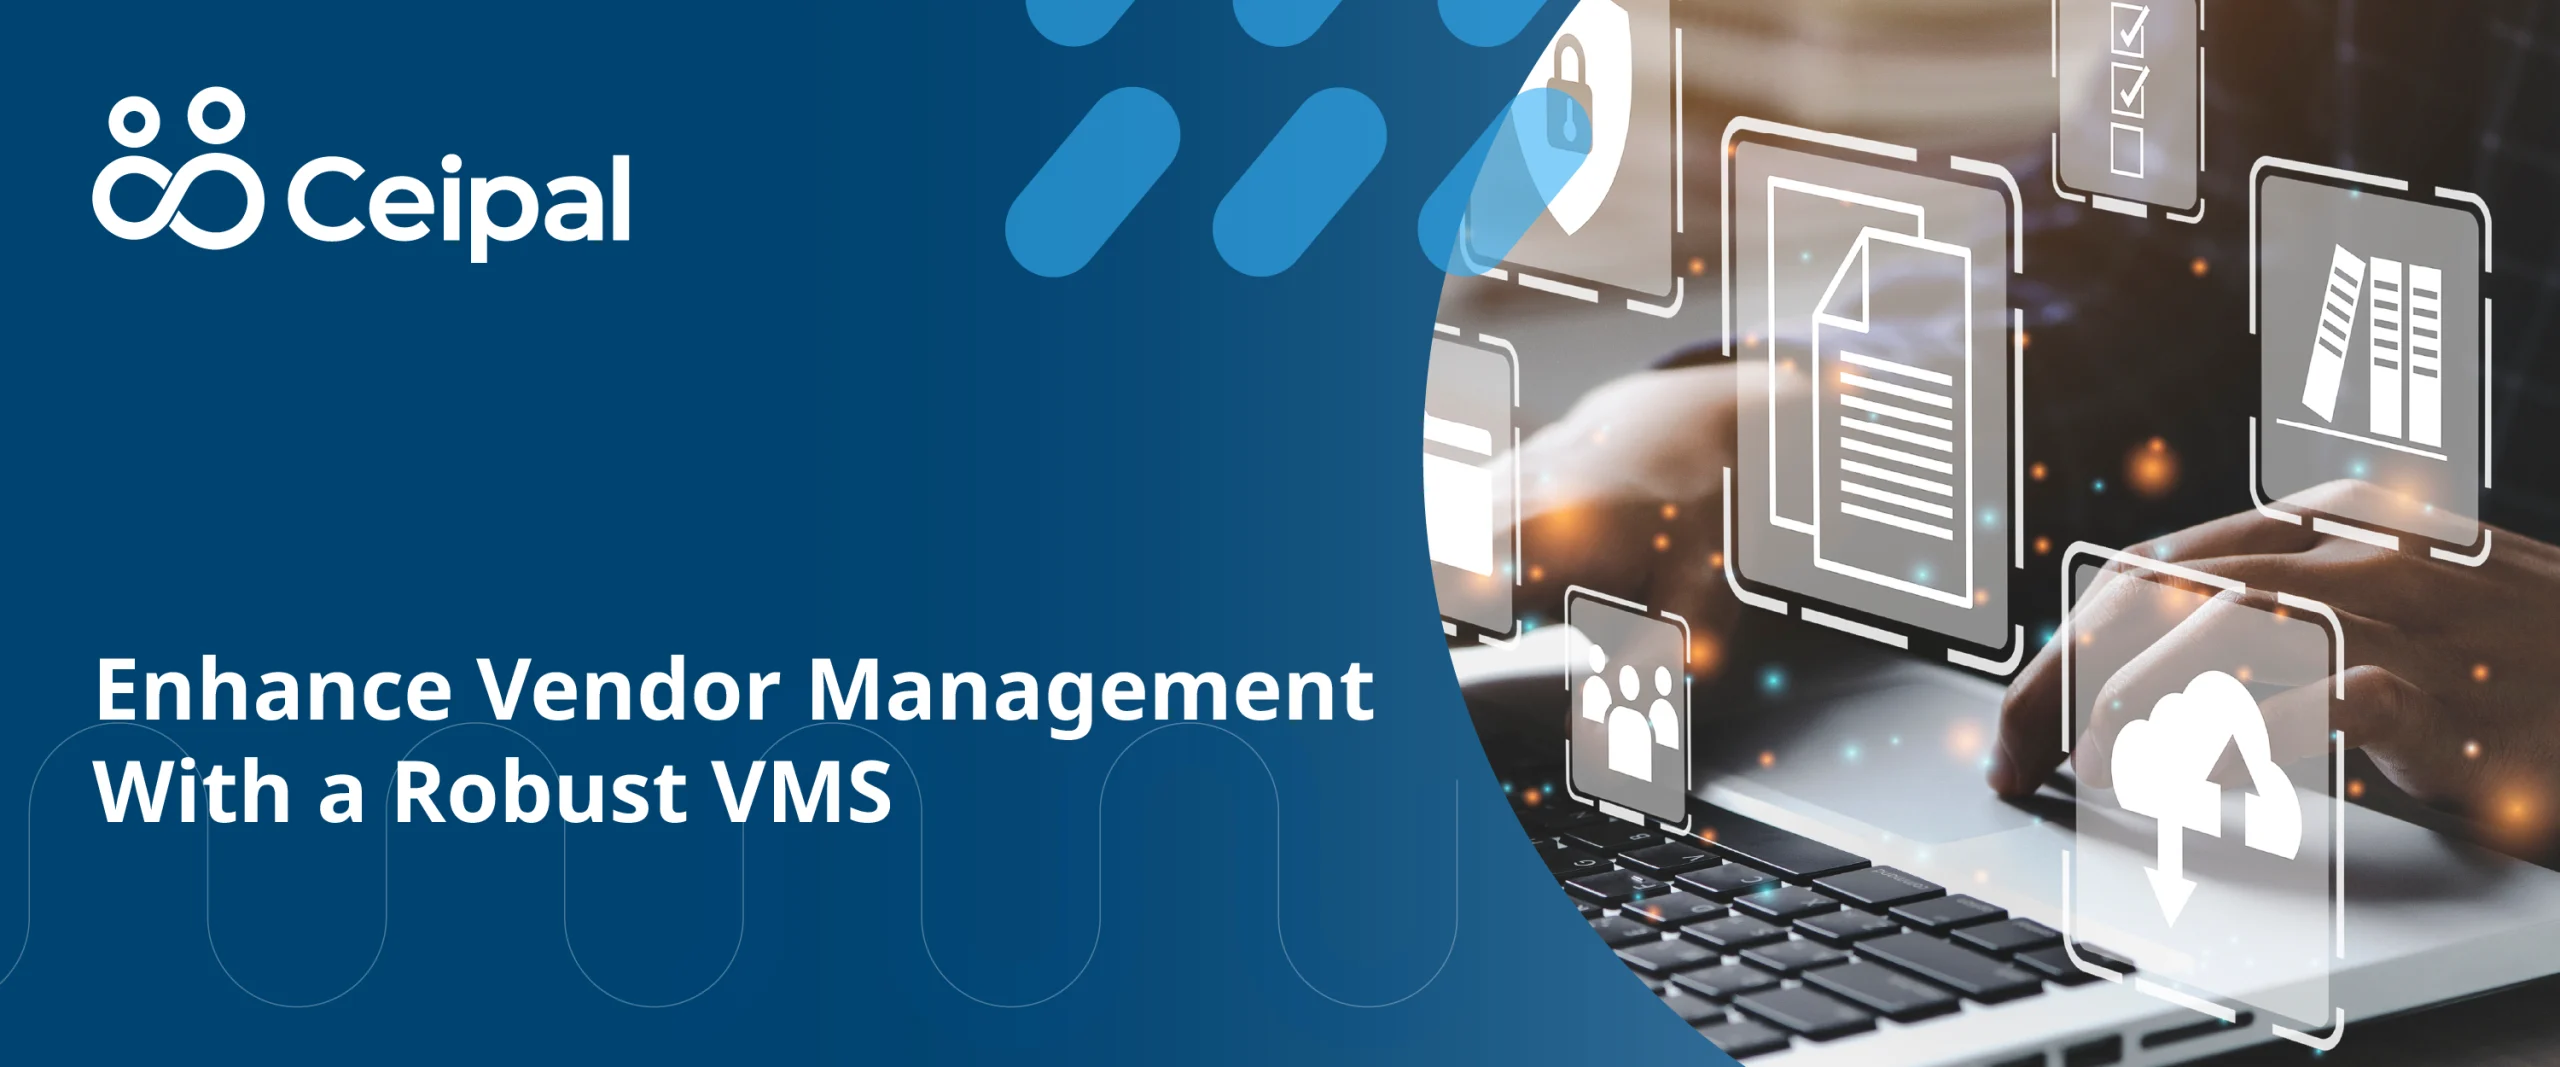 Enhance Vendor Management With a Robust VMS